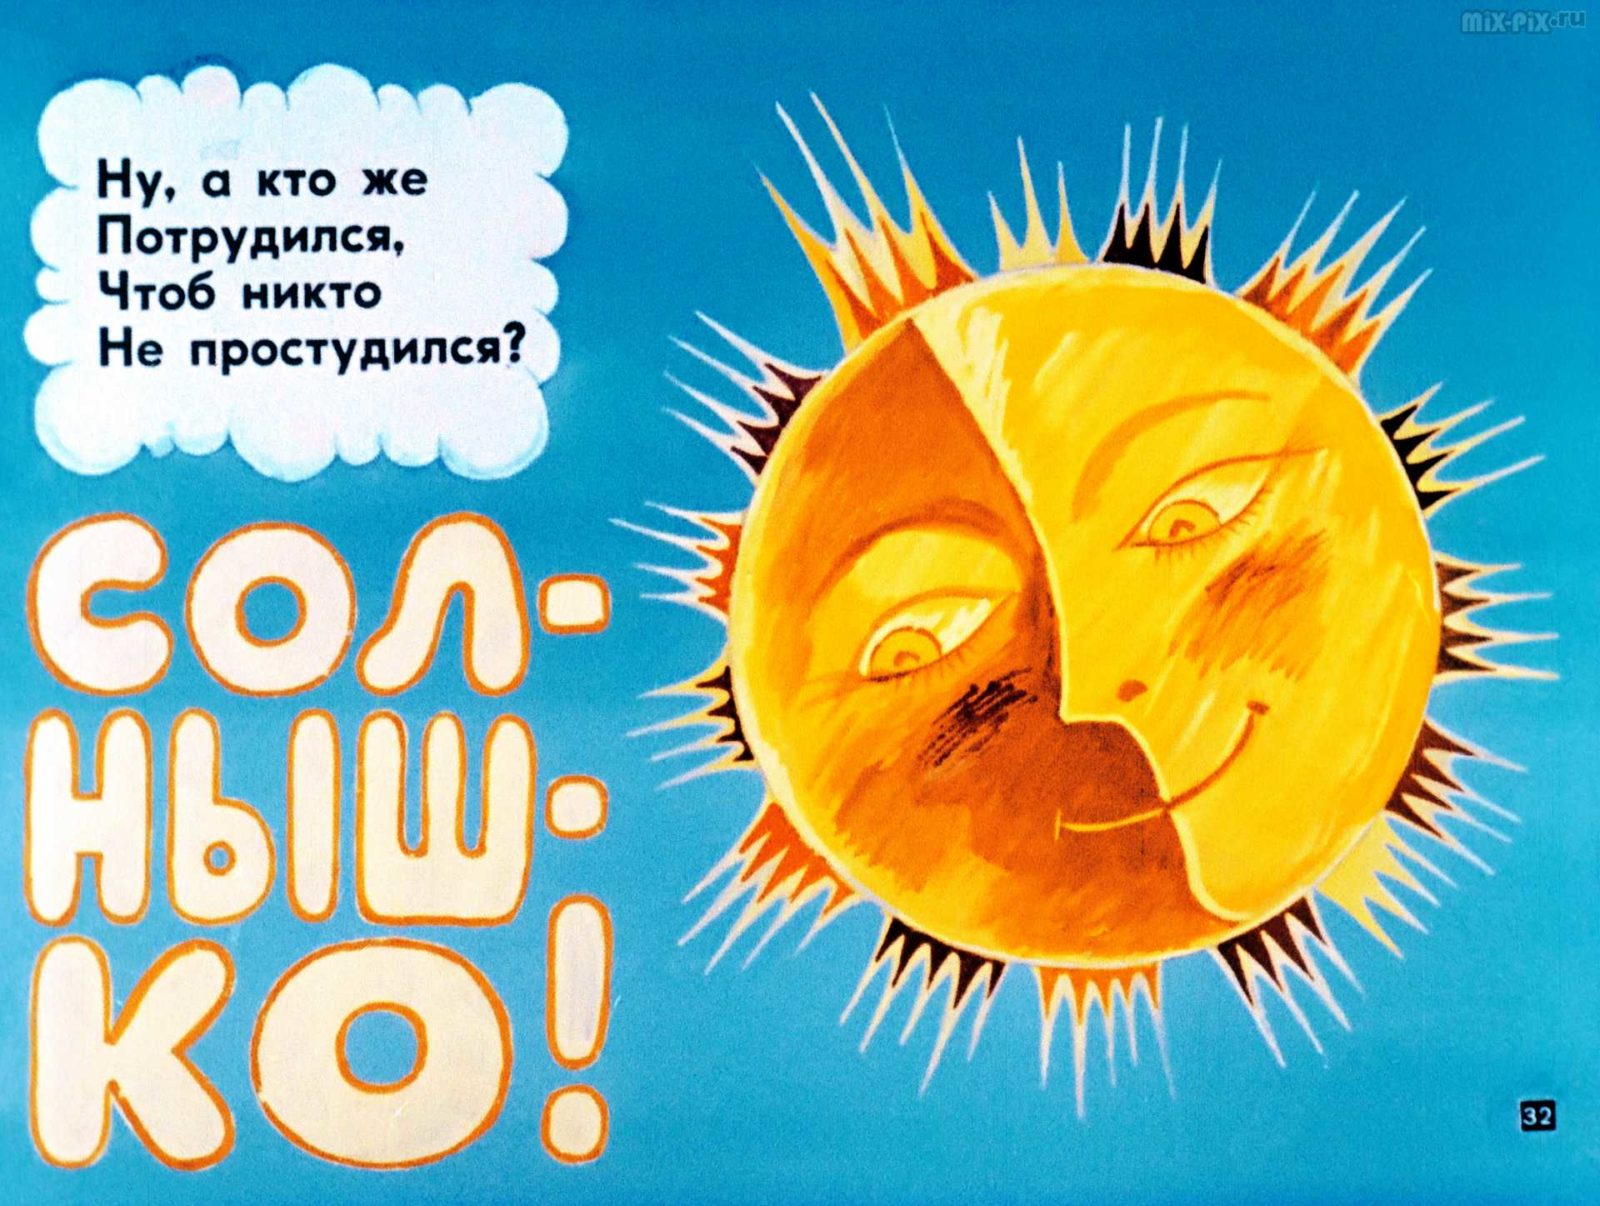 Под солнцем пляшет девочка. Стихотворение под солнцем пляшет девочка. Детский диафильм СССР под солнцем пляшет девочка.